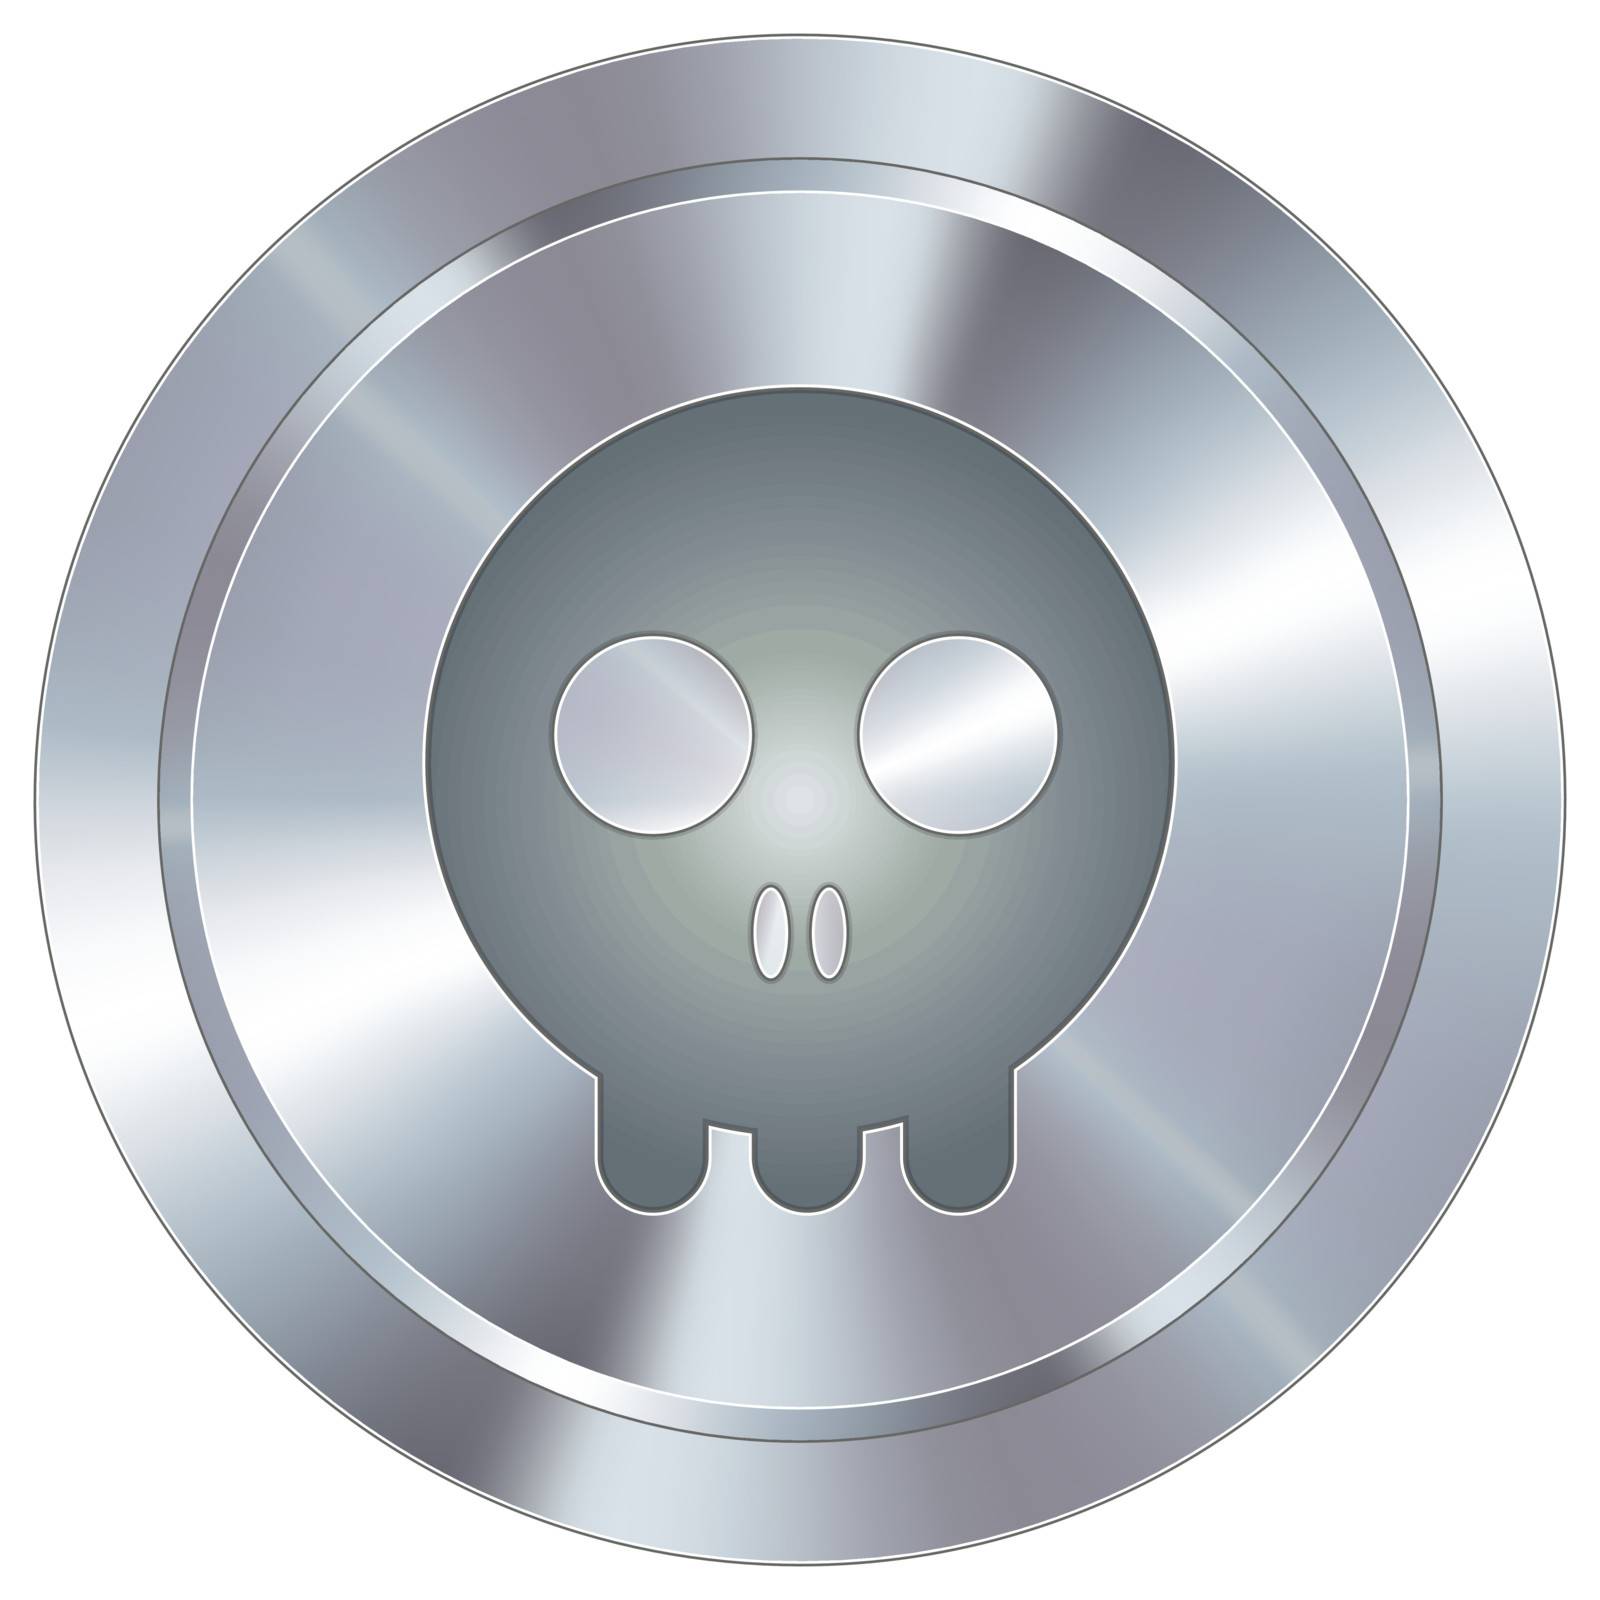 Skull icon on round stainless steel modern industrial button